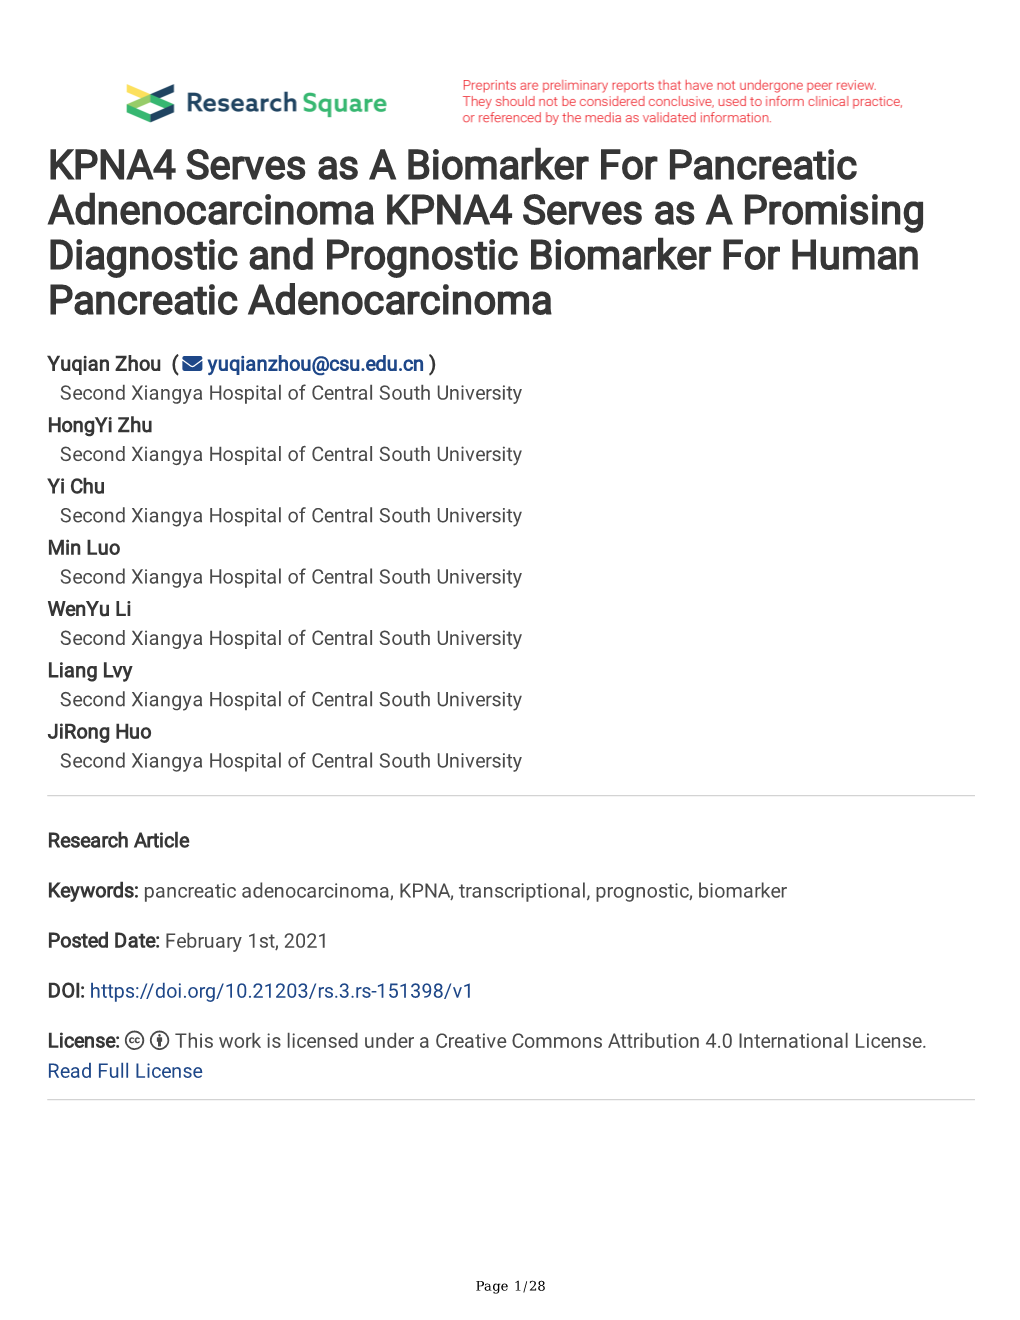 KPNA4 Serves As a Biomarker for Pancreatic Adnenocarcinoma KPNA4 Serves As a Promising Diagnostic and Prognostic Biomarker for Human Pancreatic Adenocarcinoma